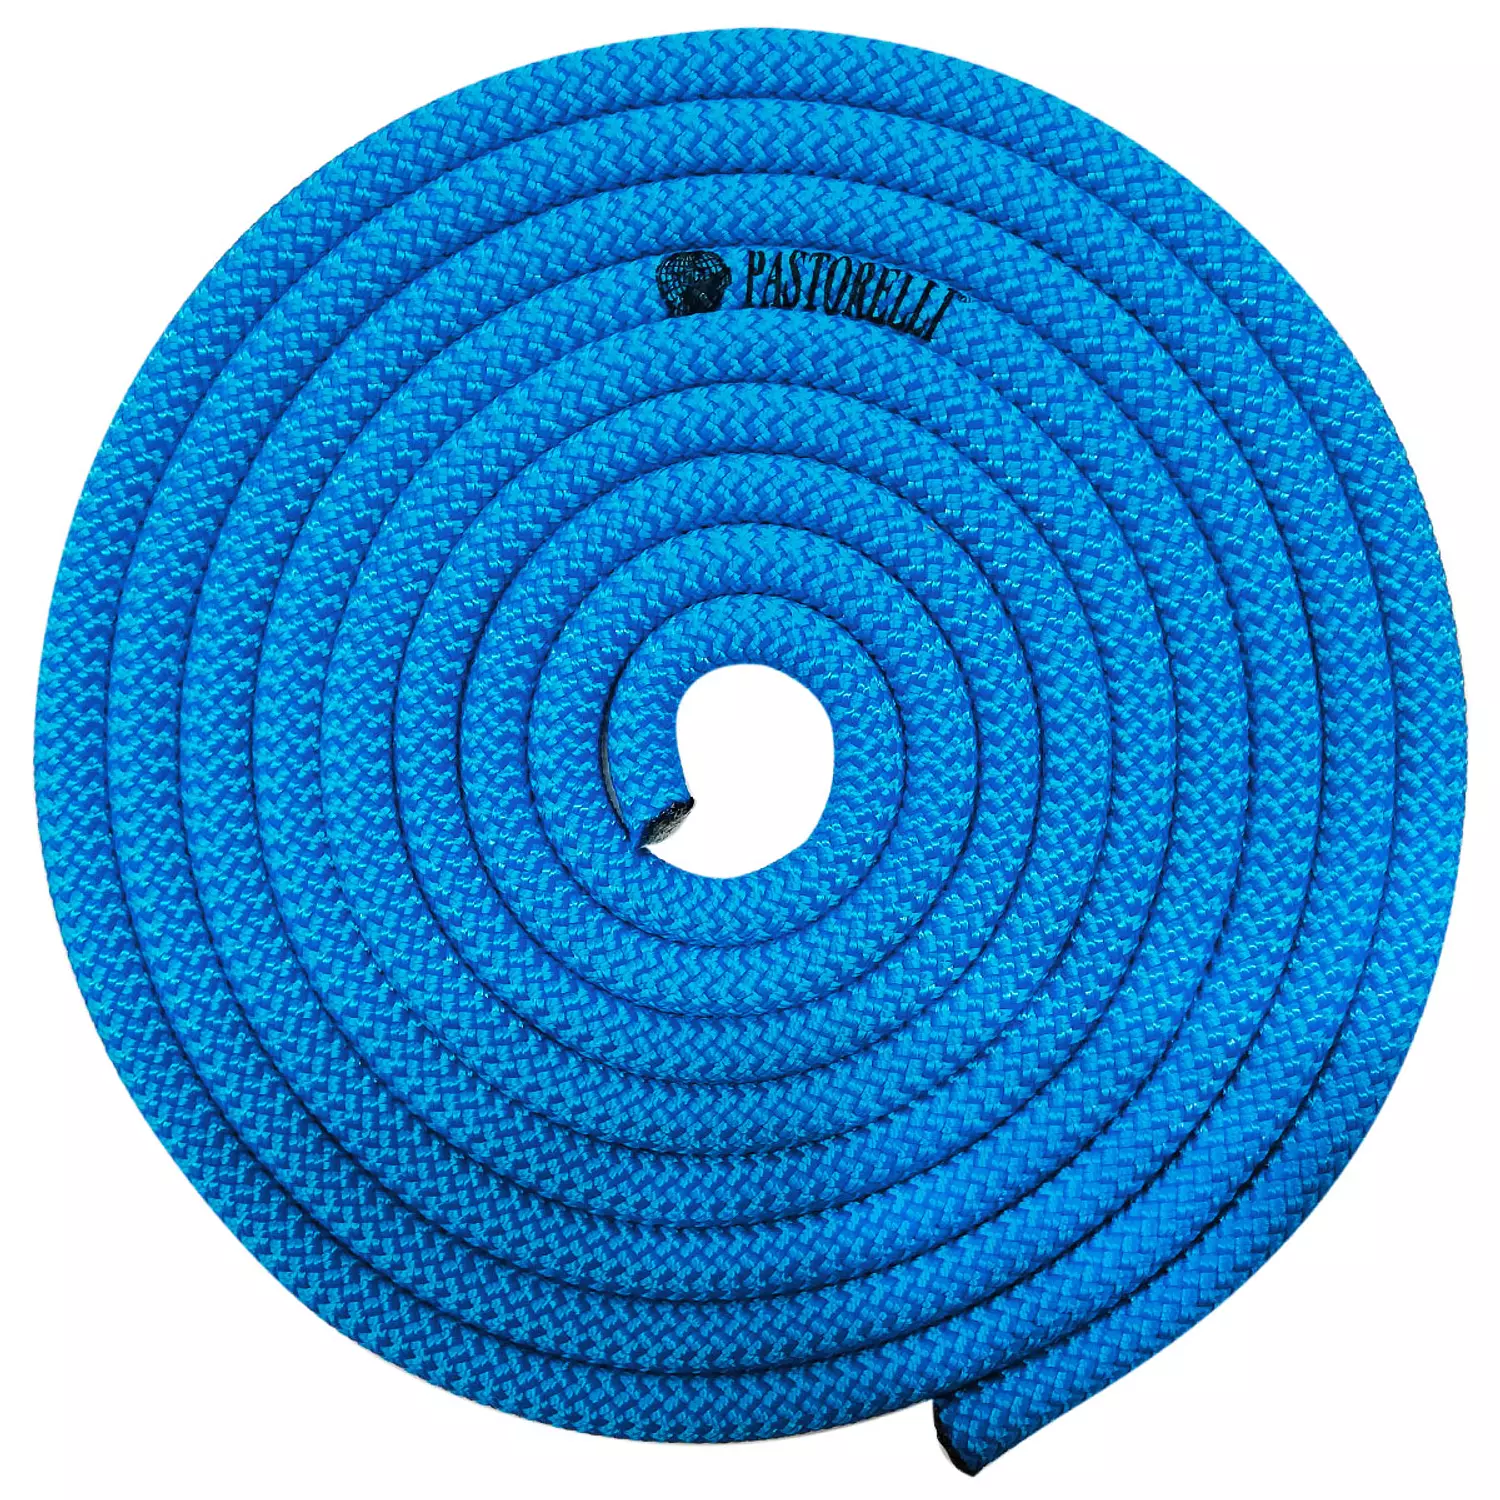 Pastorelli-New Orleans monochromatic rope FIG | 3m 2